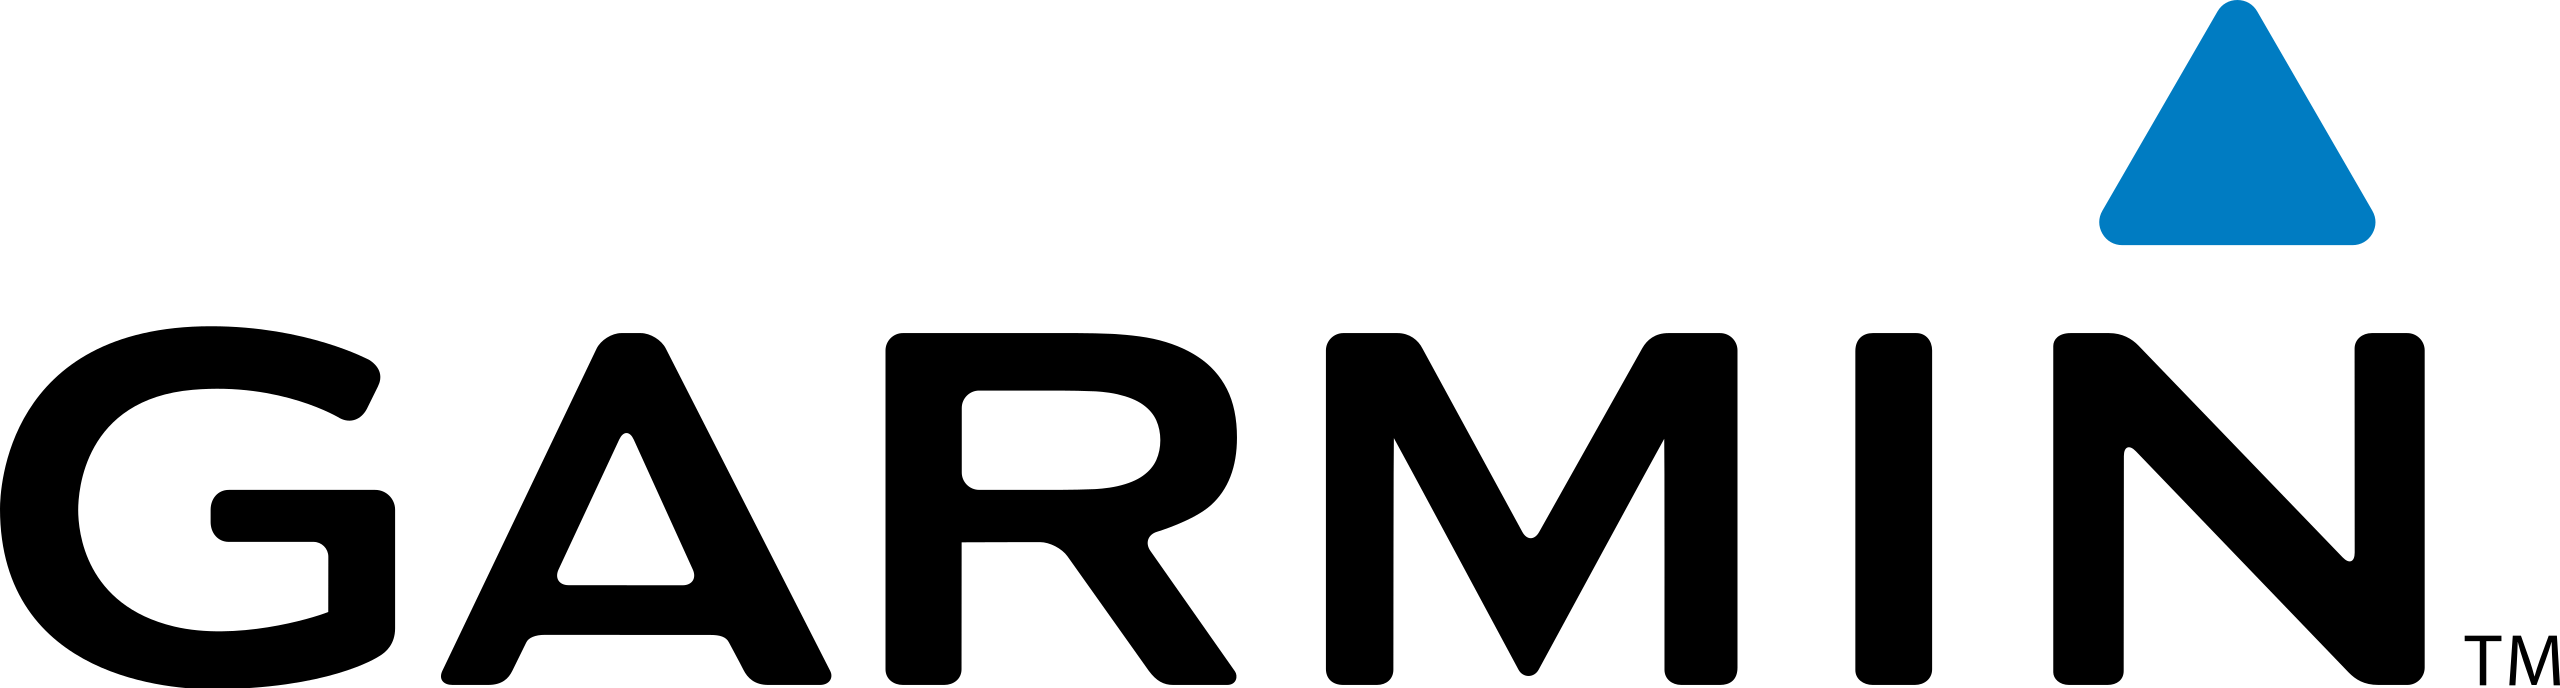 Garmin_logo_2006.svg